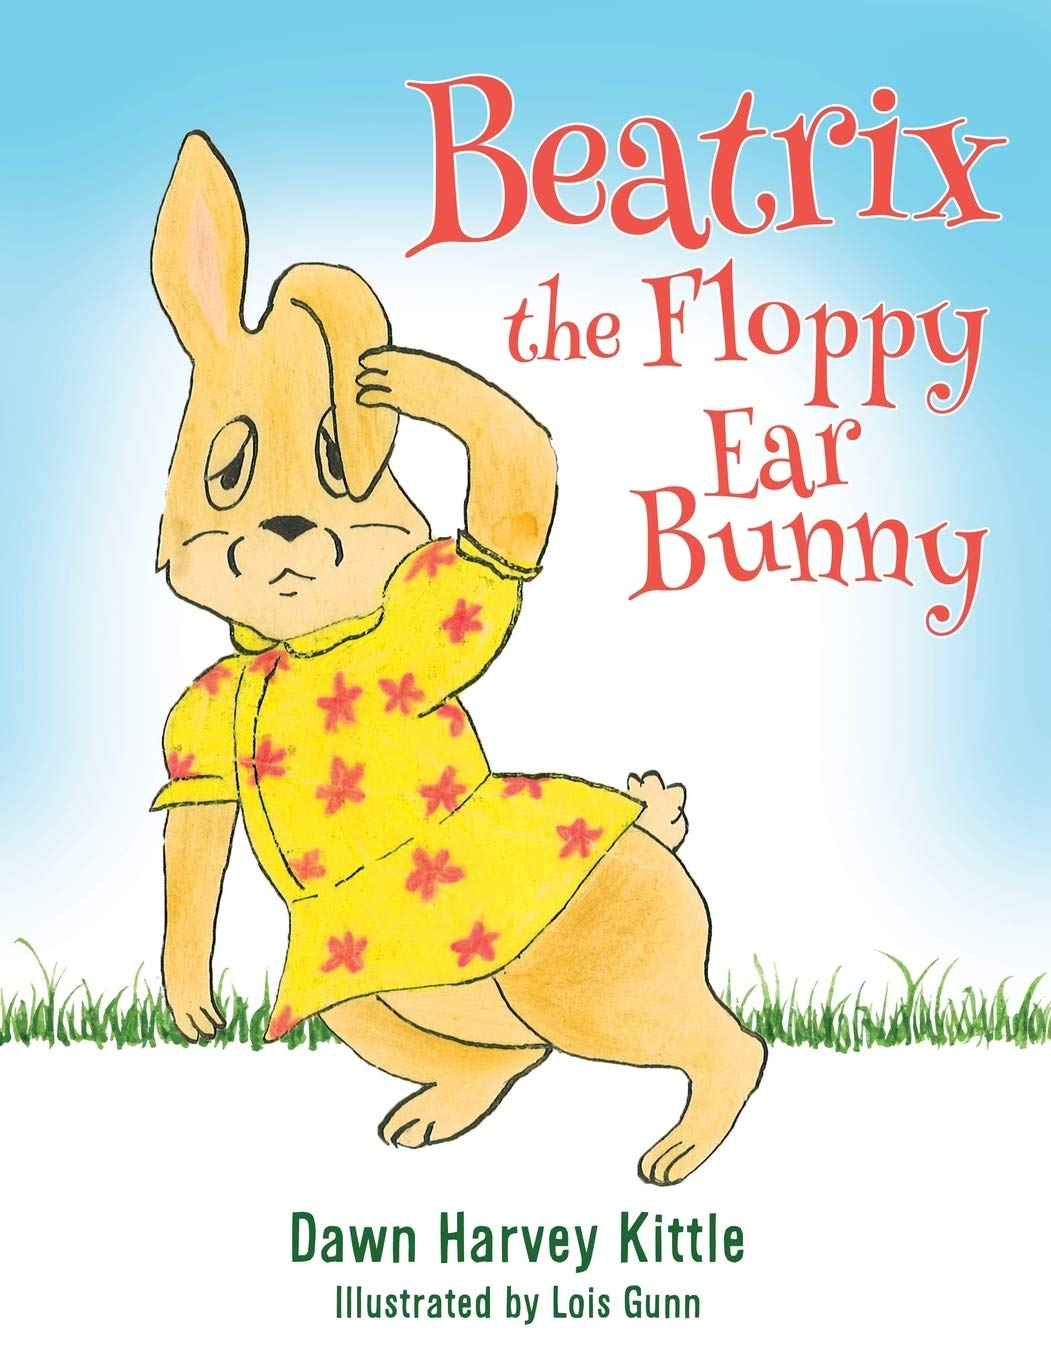 Beatrix the Floppy Ear Bunny Teaches Children about Empathy